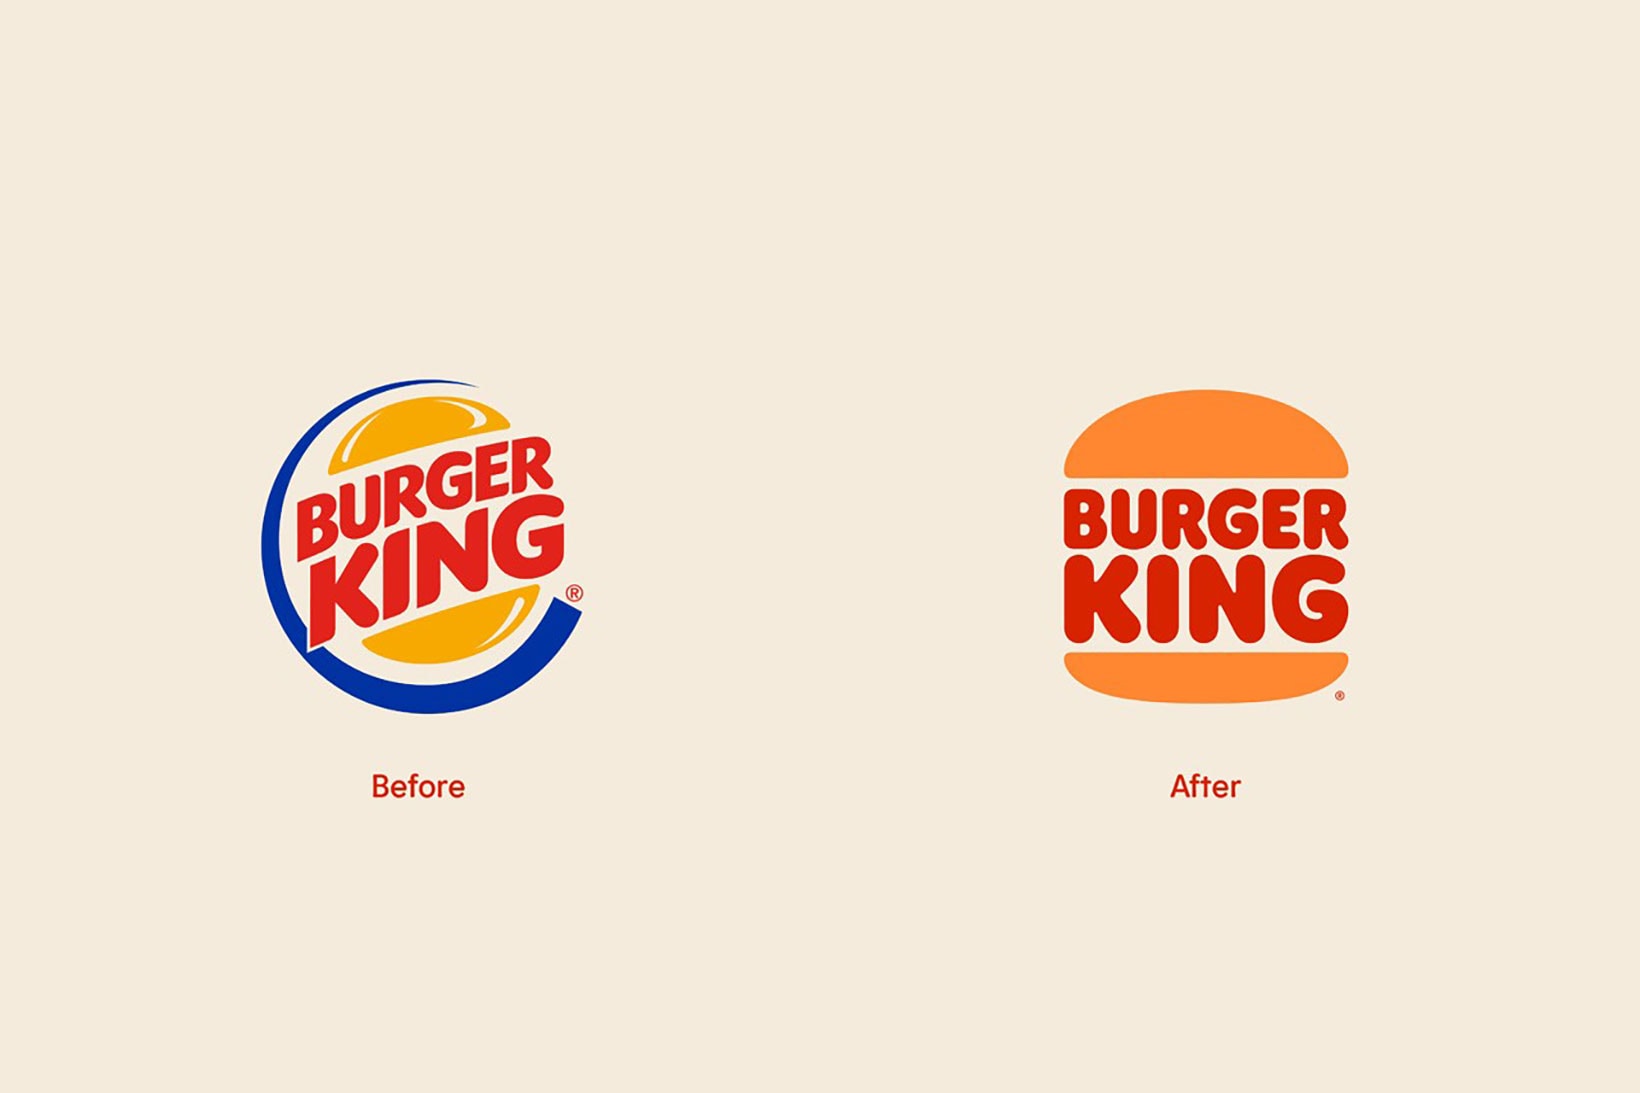 burger king rebrand new minimal design logo fast food restaurant store orange red blue